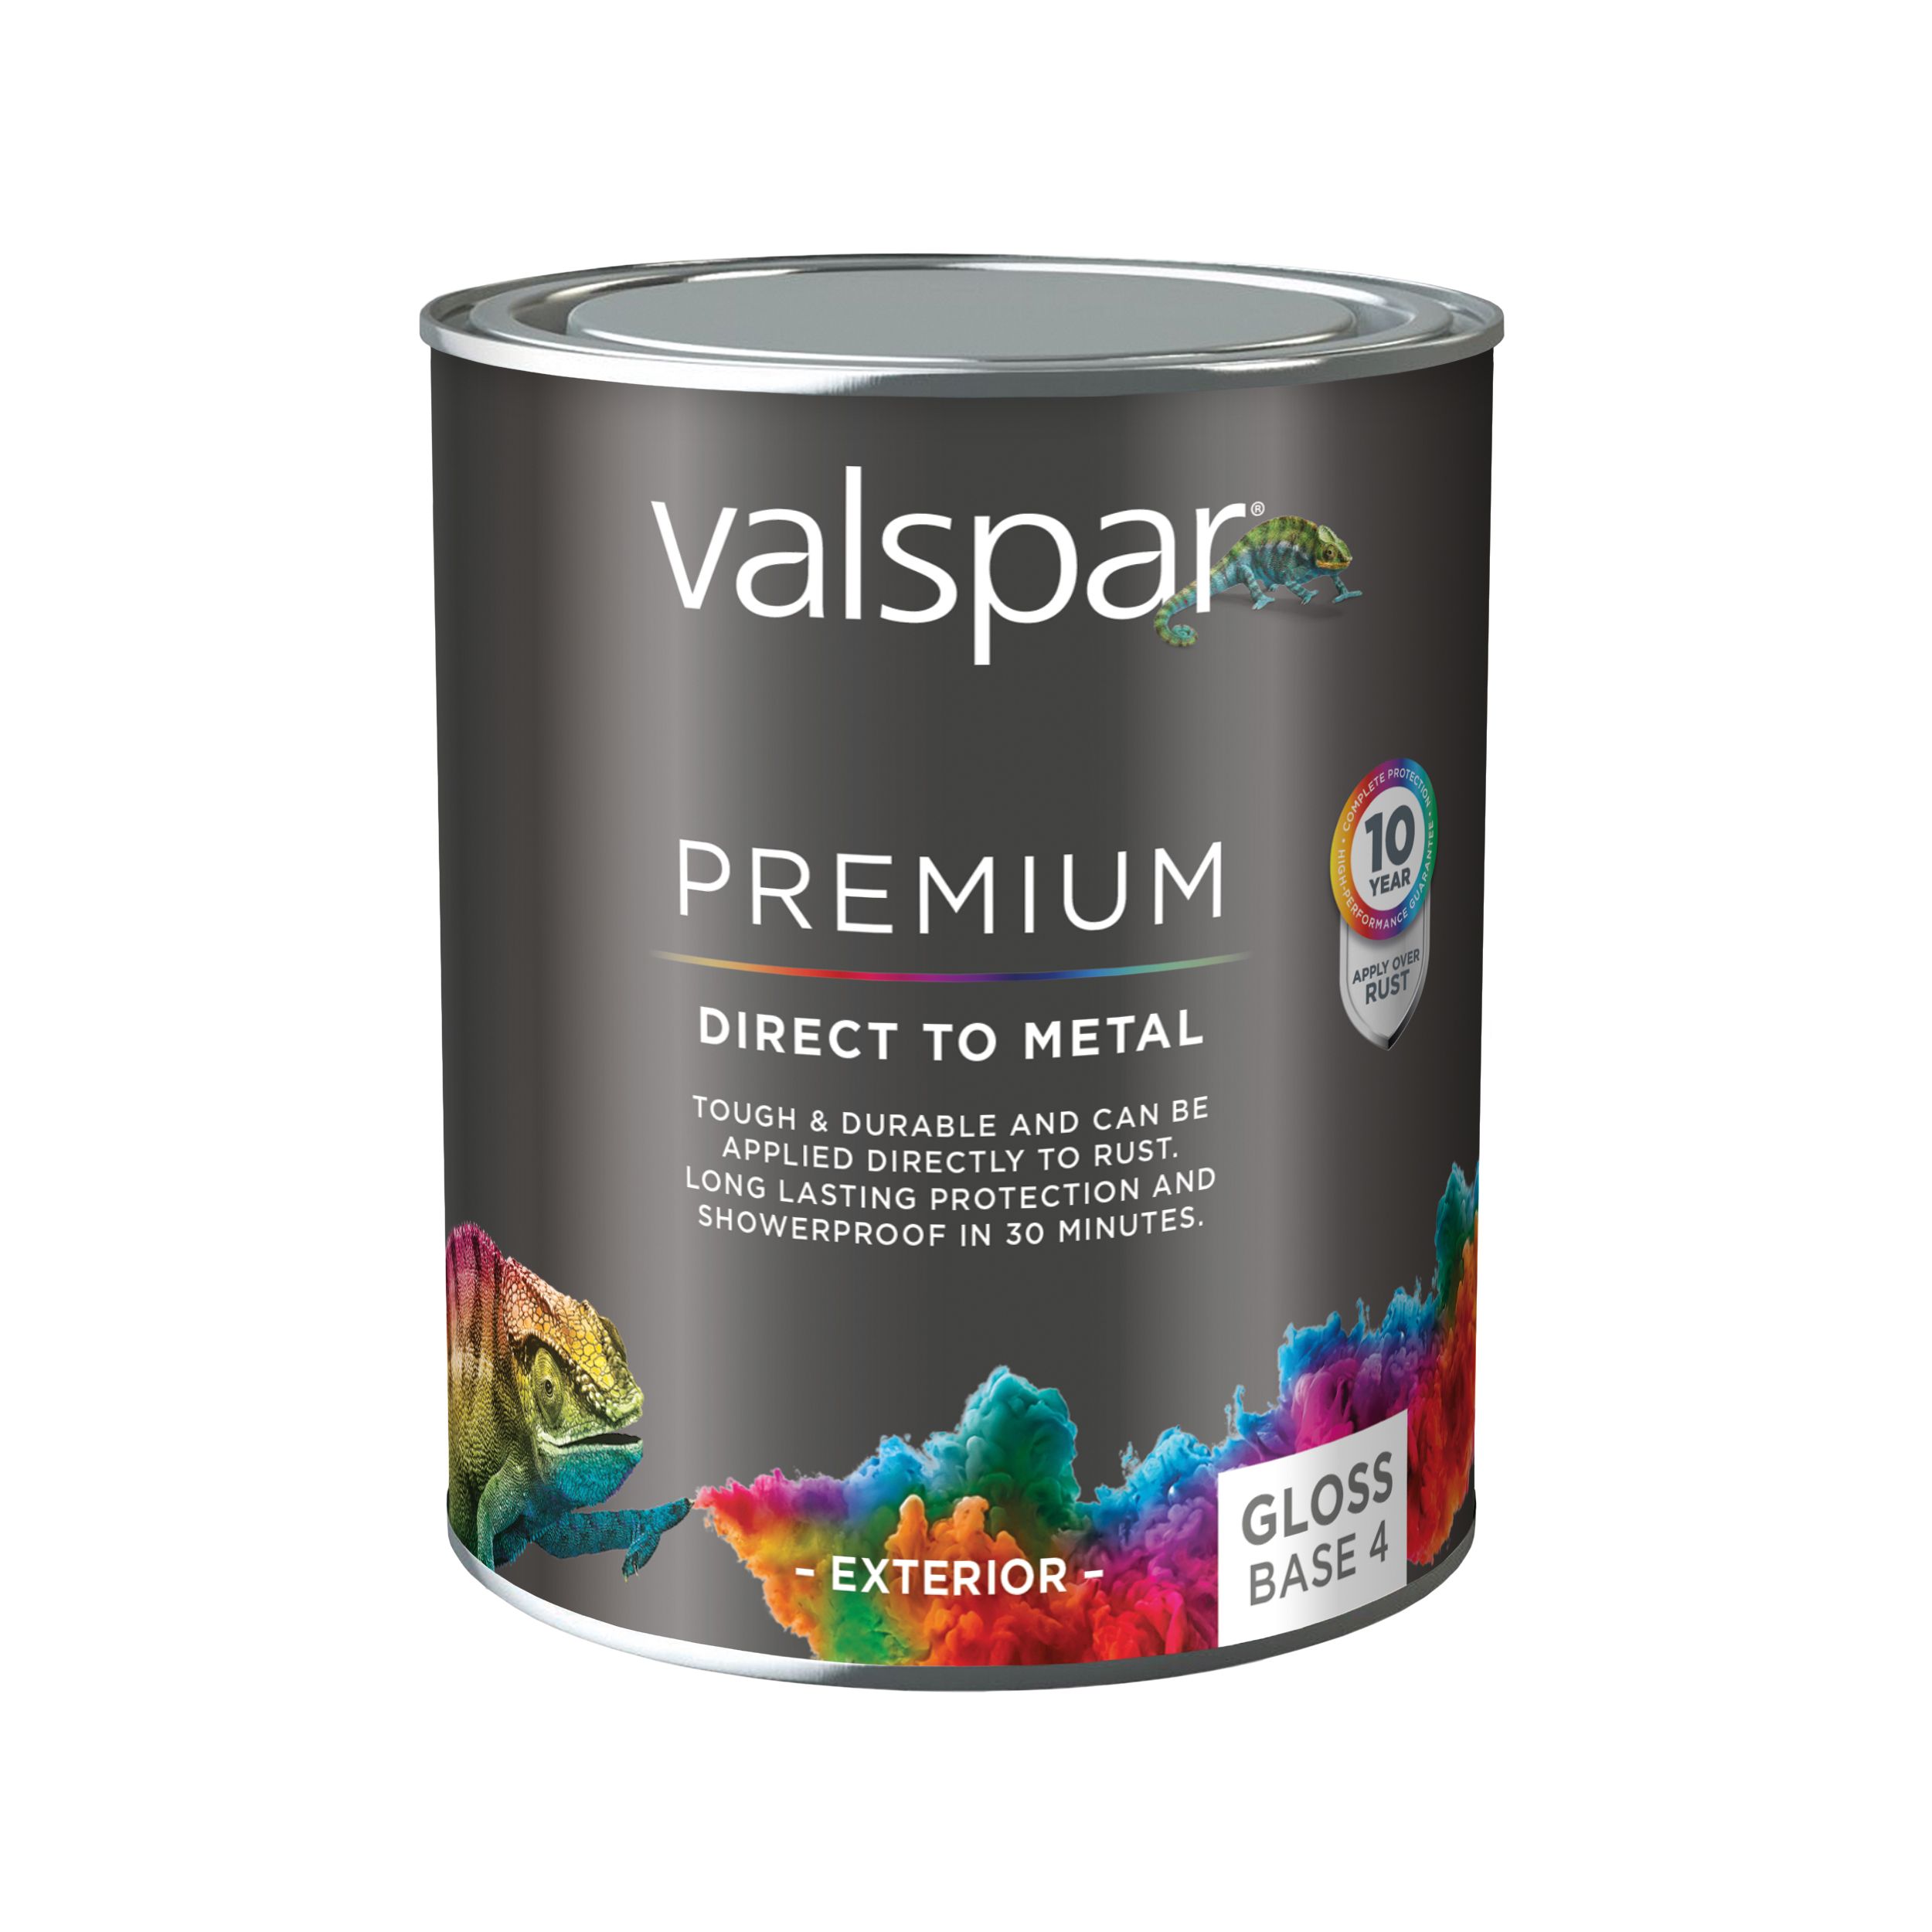 Valspar Premium Direct to Metal Exterior Metal & wood Gloss Basecoat, Mixed, Base C, 750ml